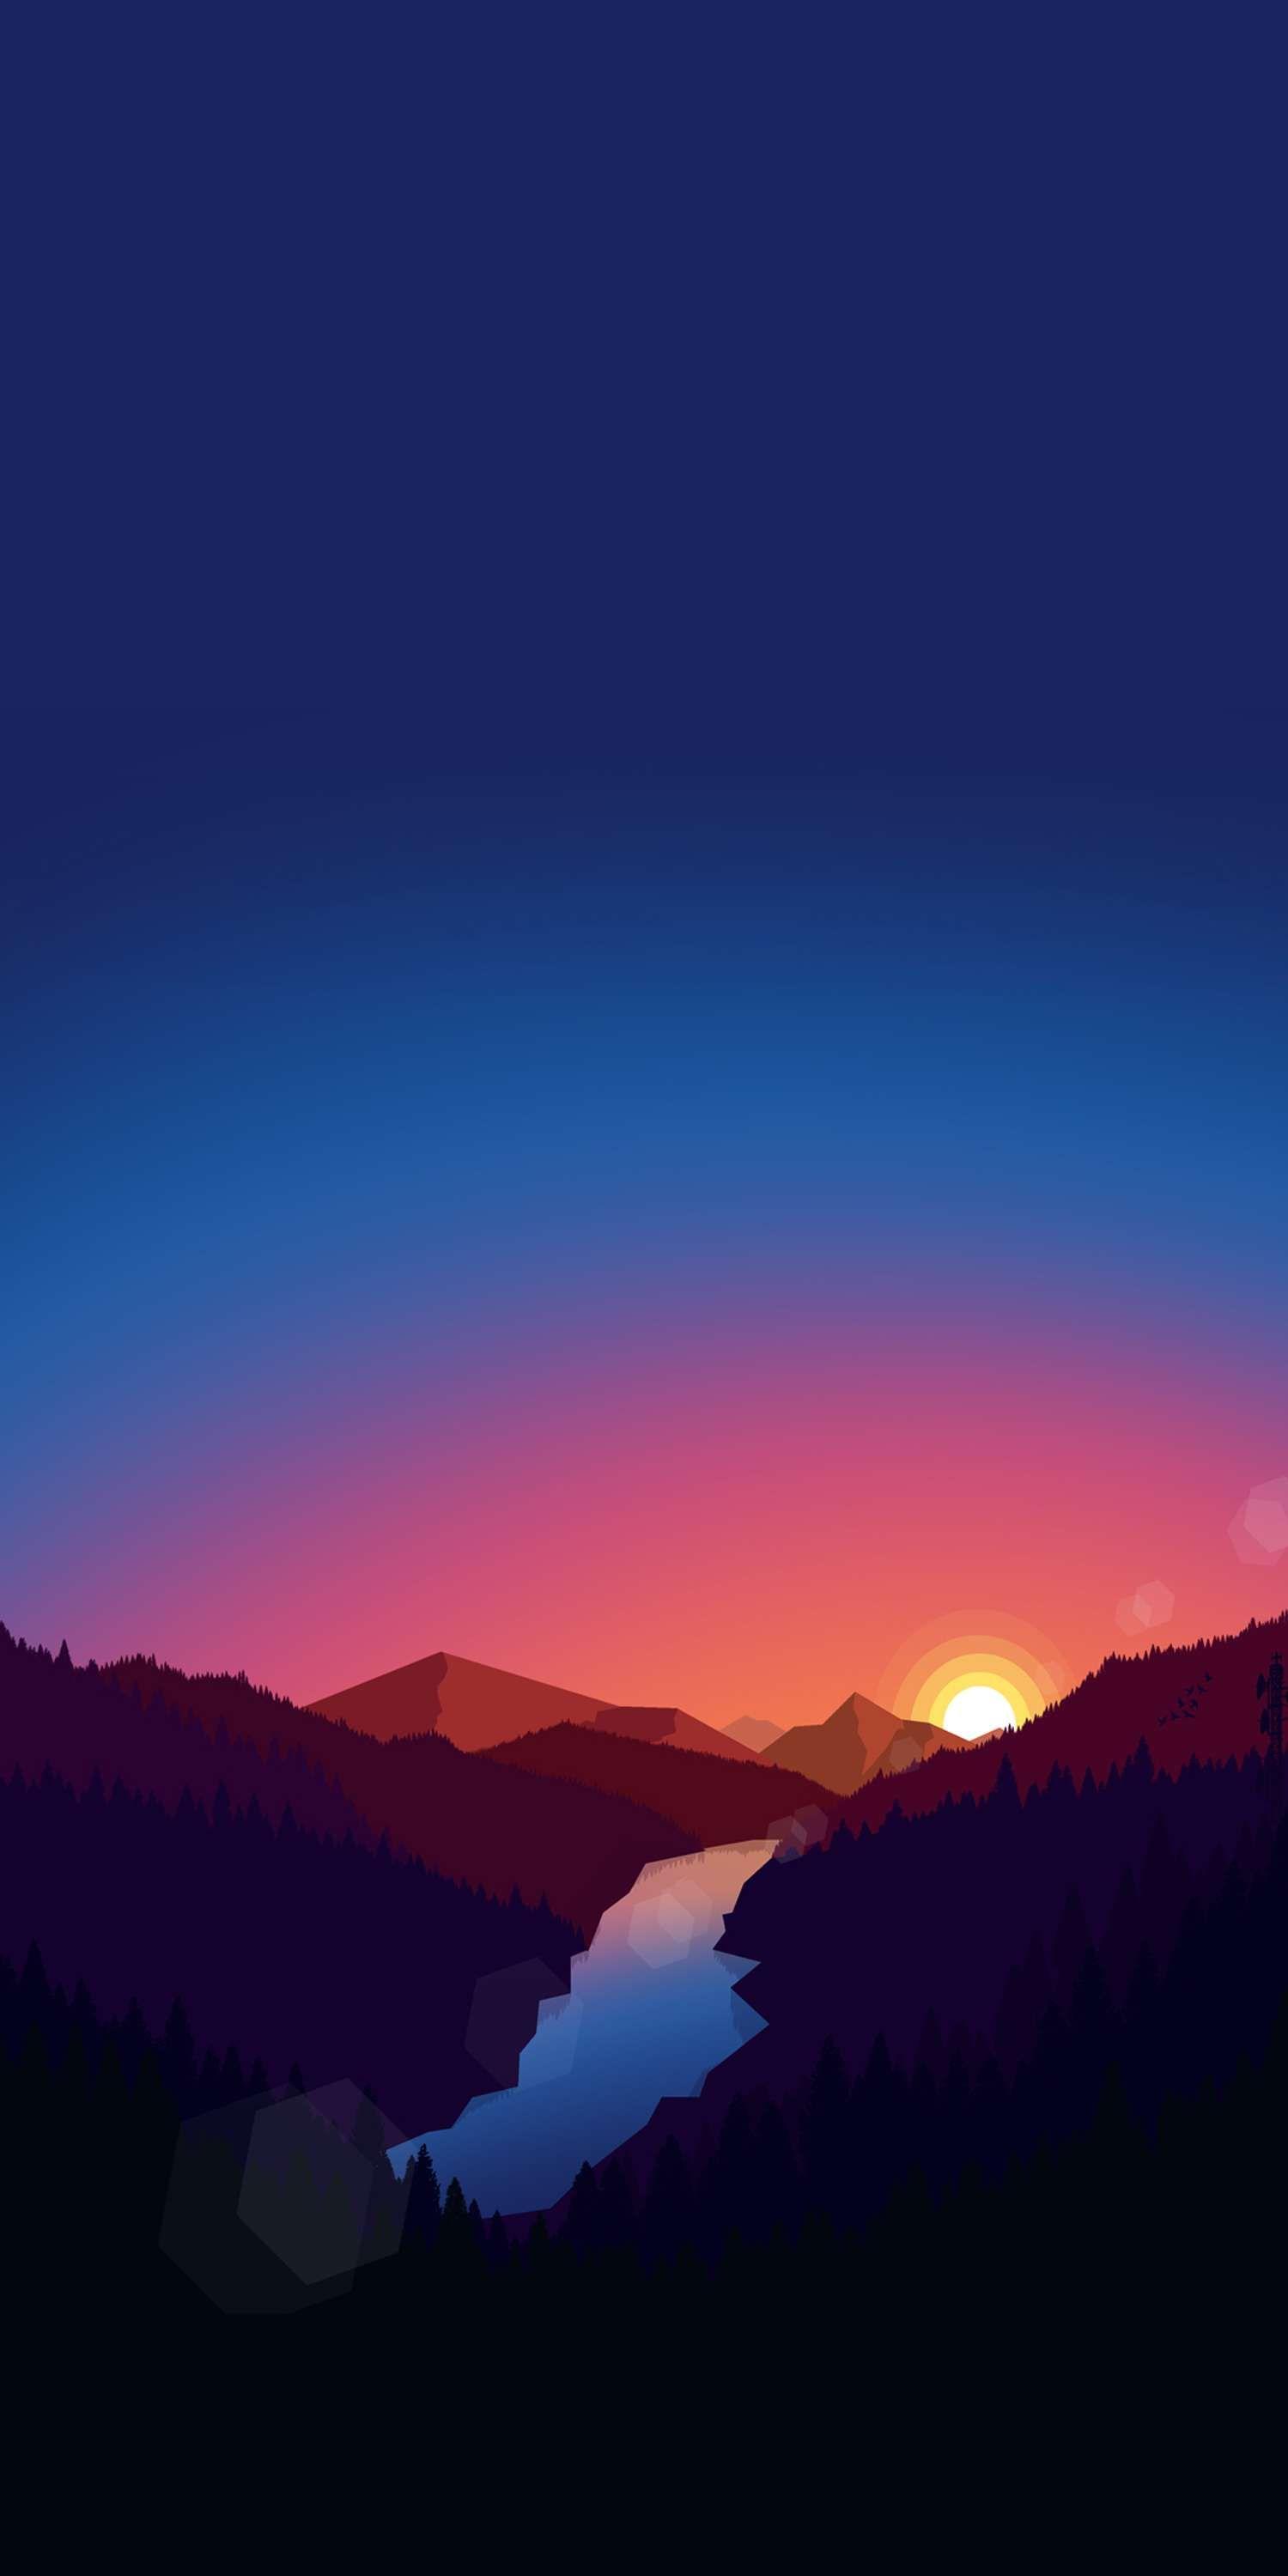 Sunrise View Minimal Nature iPhone Wallpaper in 2019